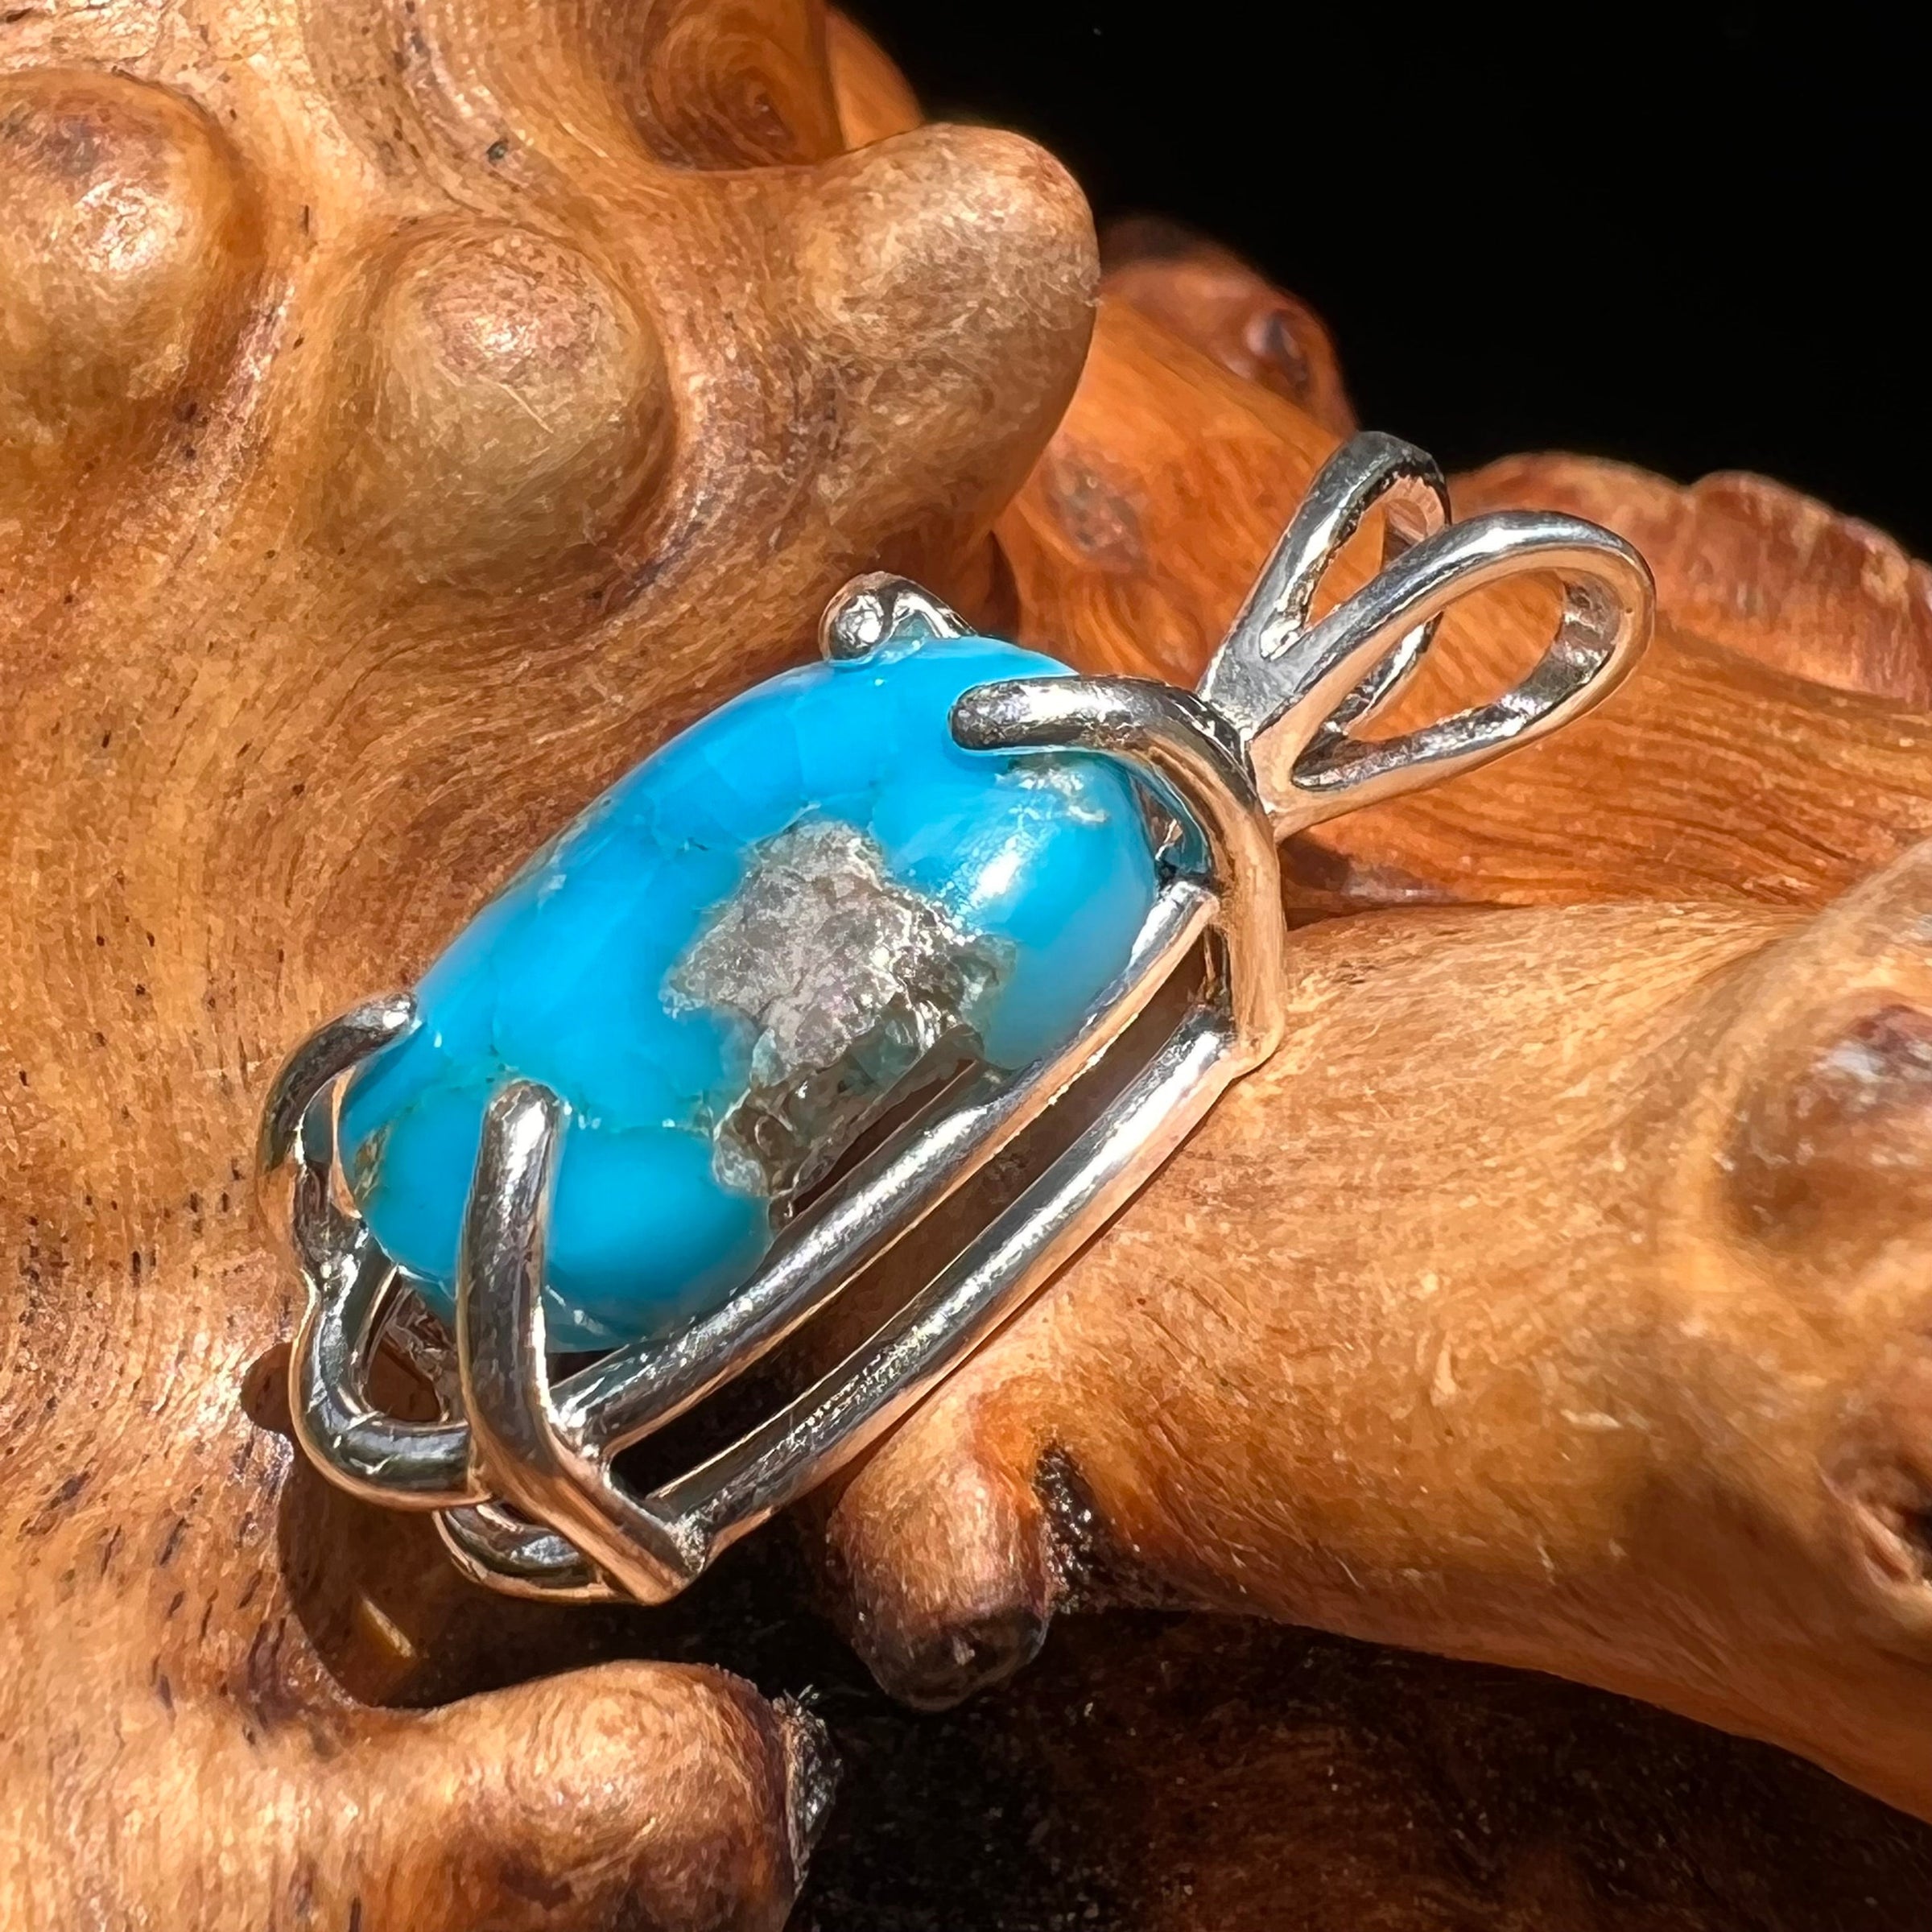 Kingsman Turquoise Pendant Sterling Silver #2688-Moldavite Life